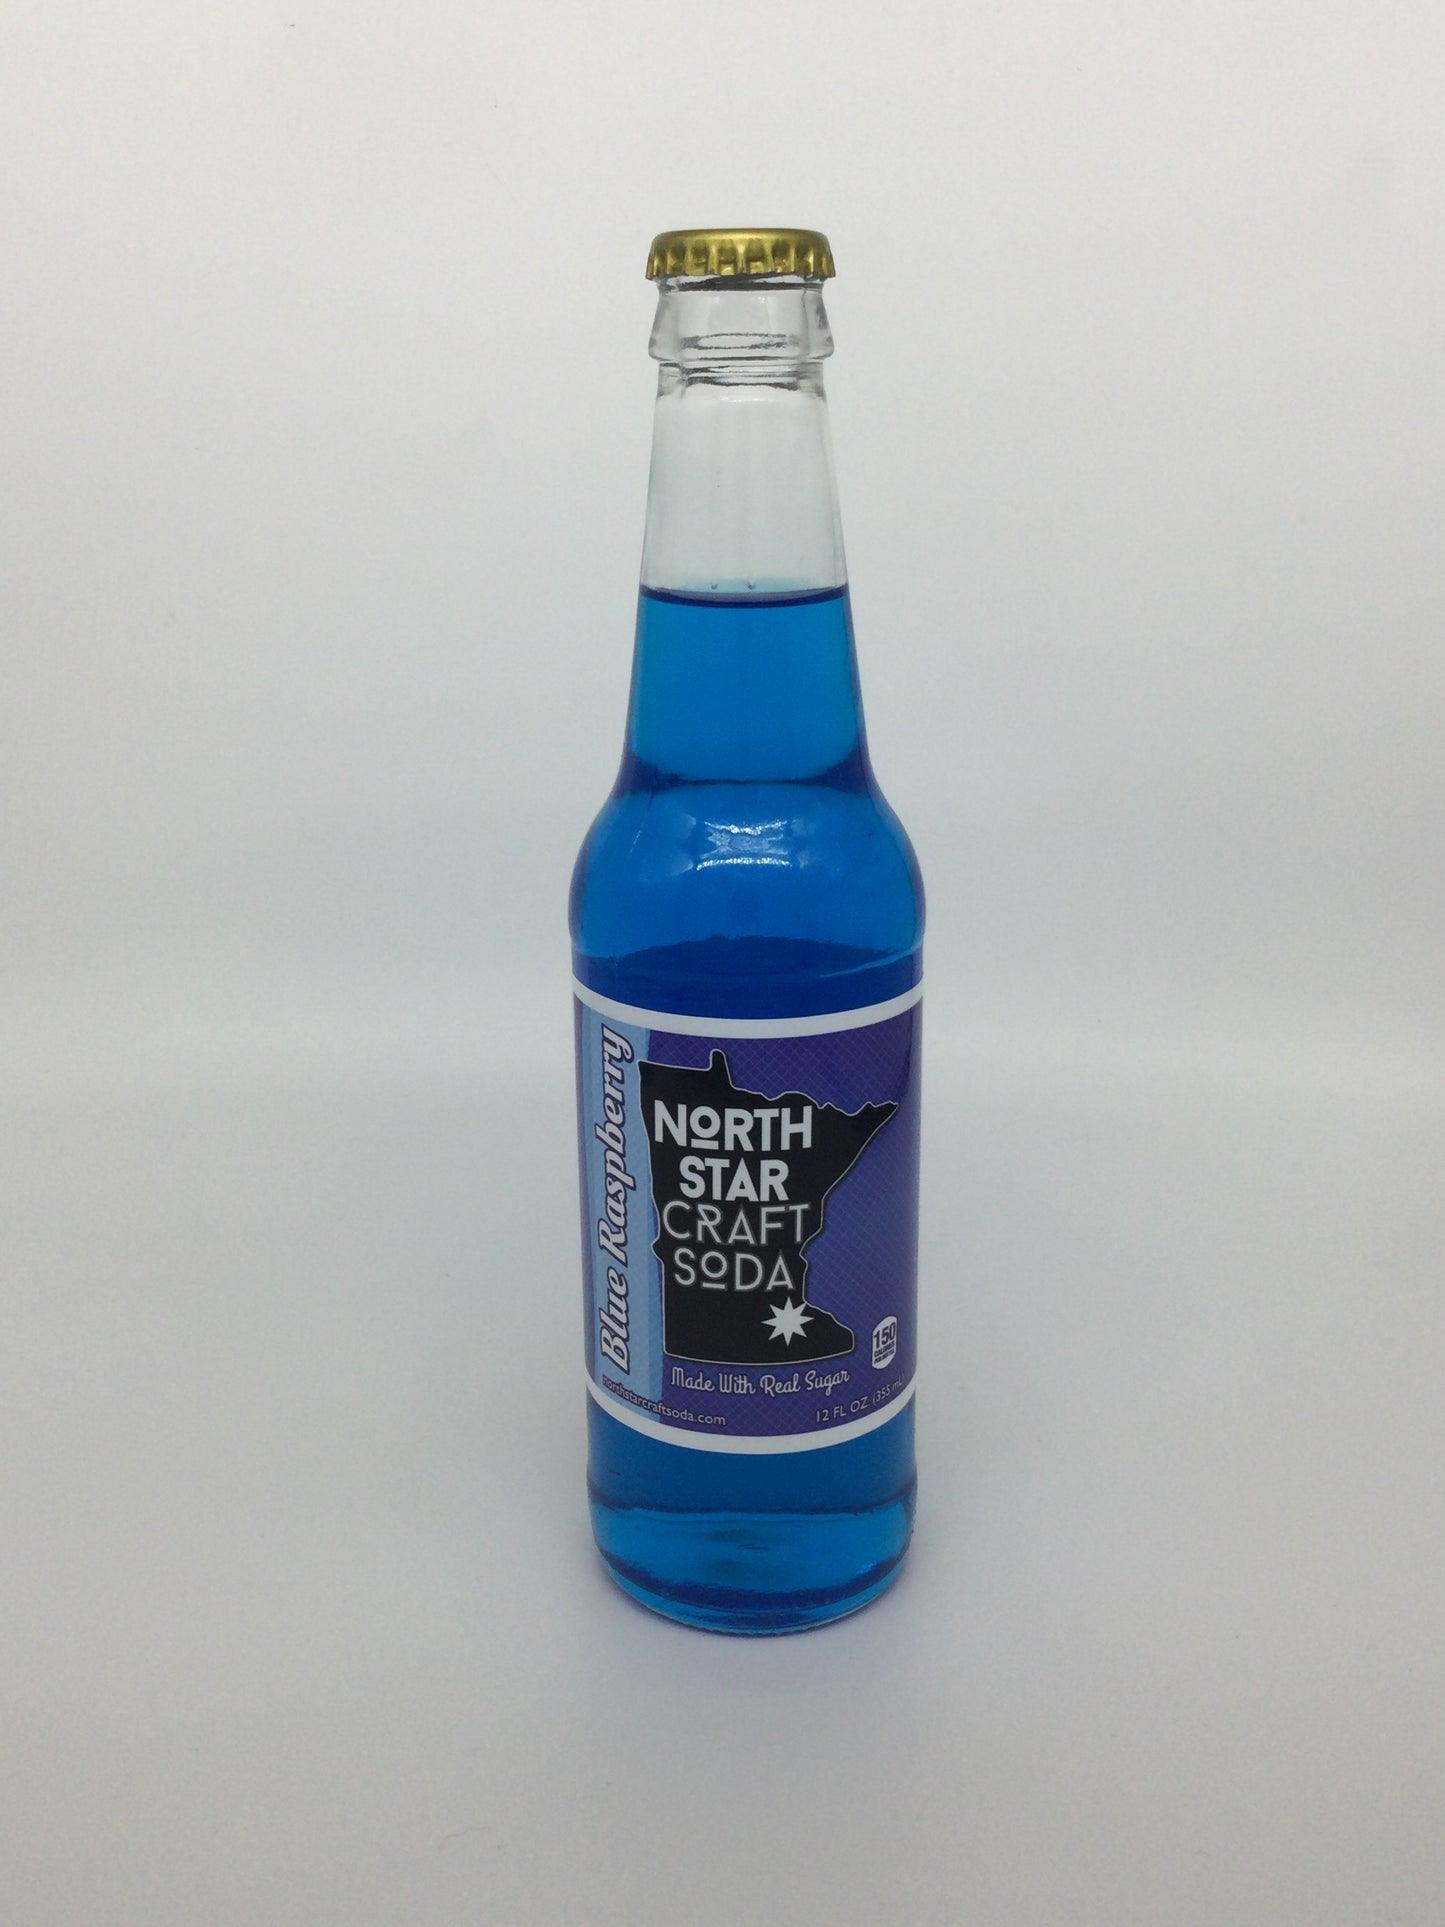 North Star Craft Soda